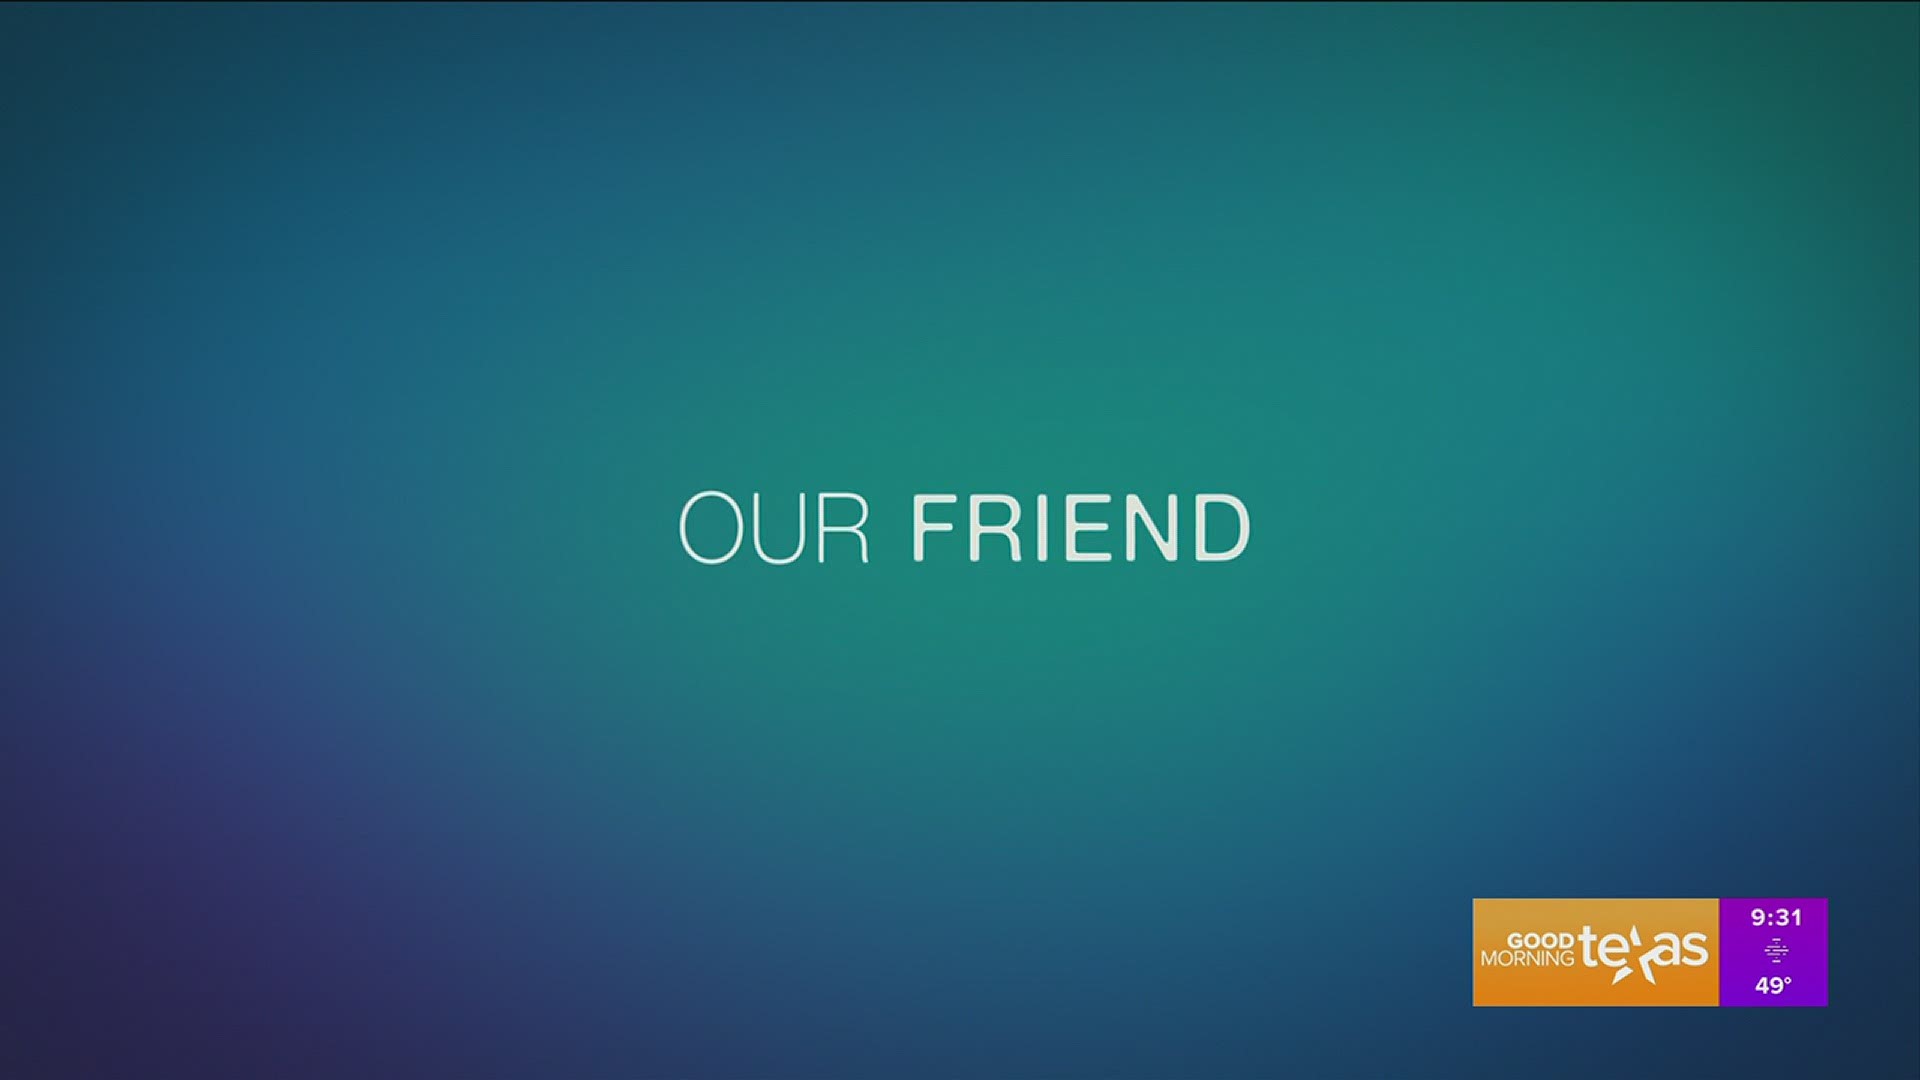 "Our Friend"